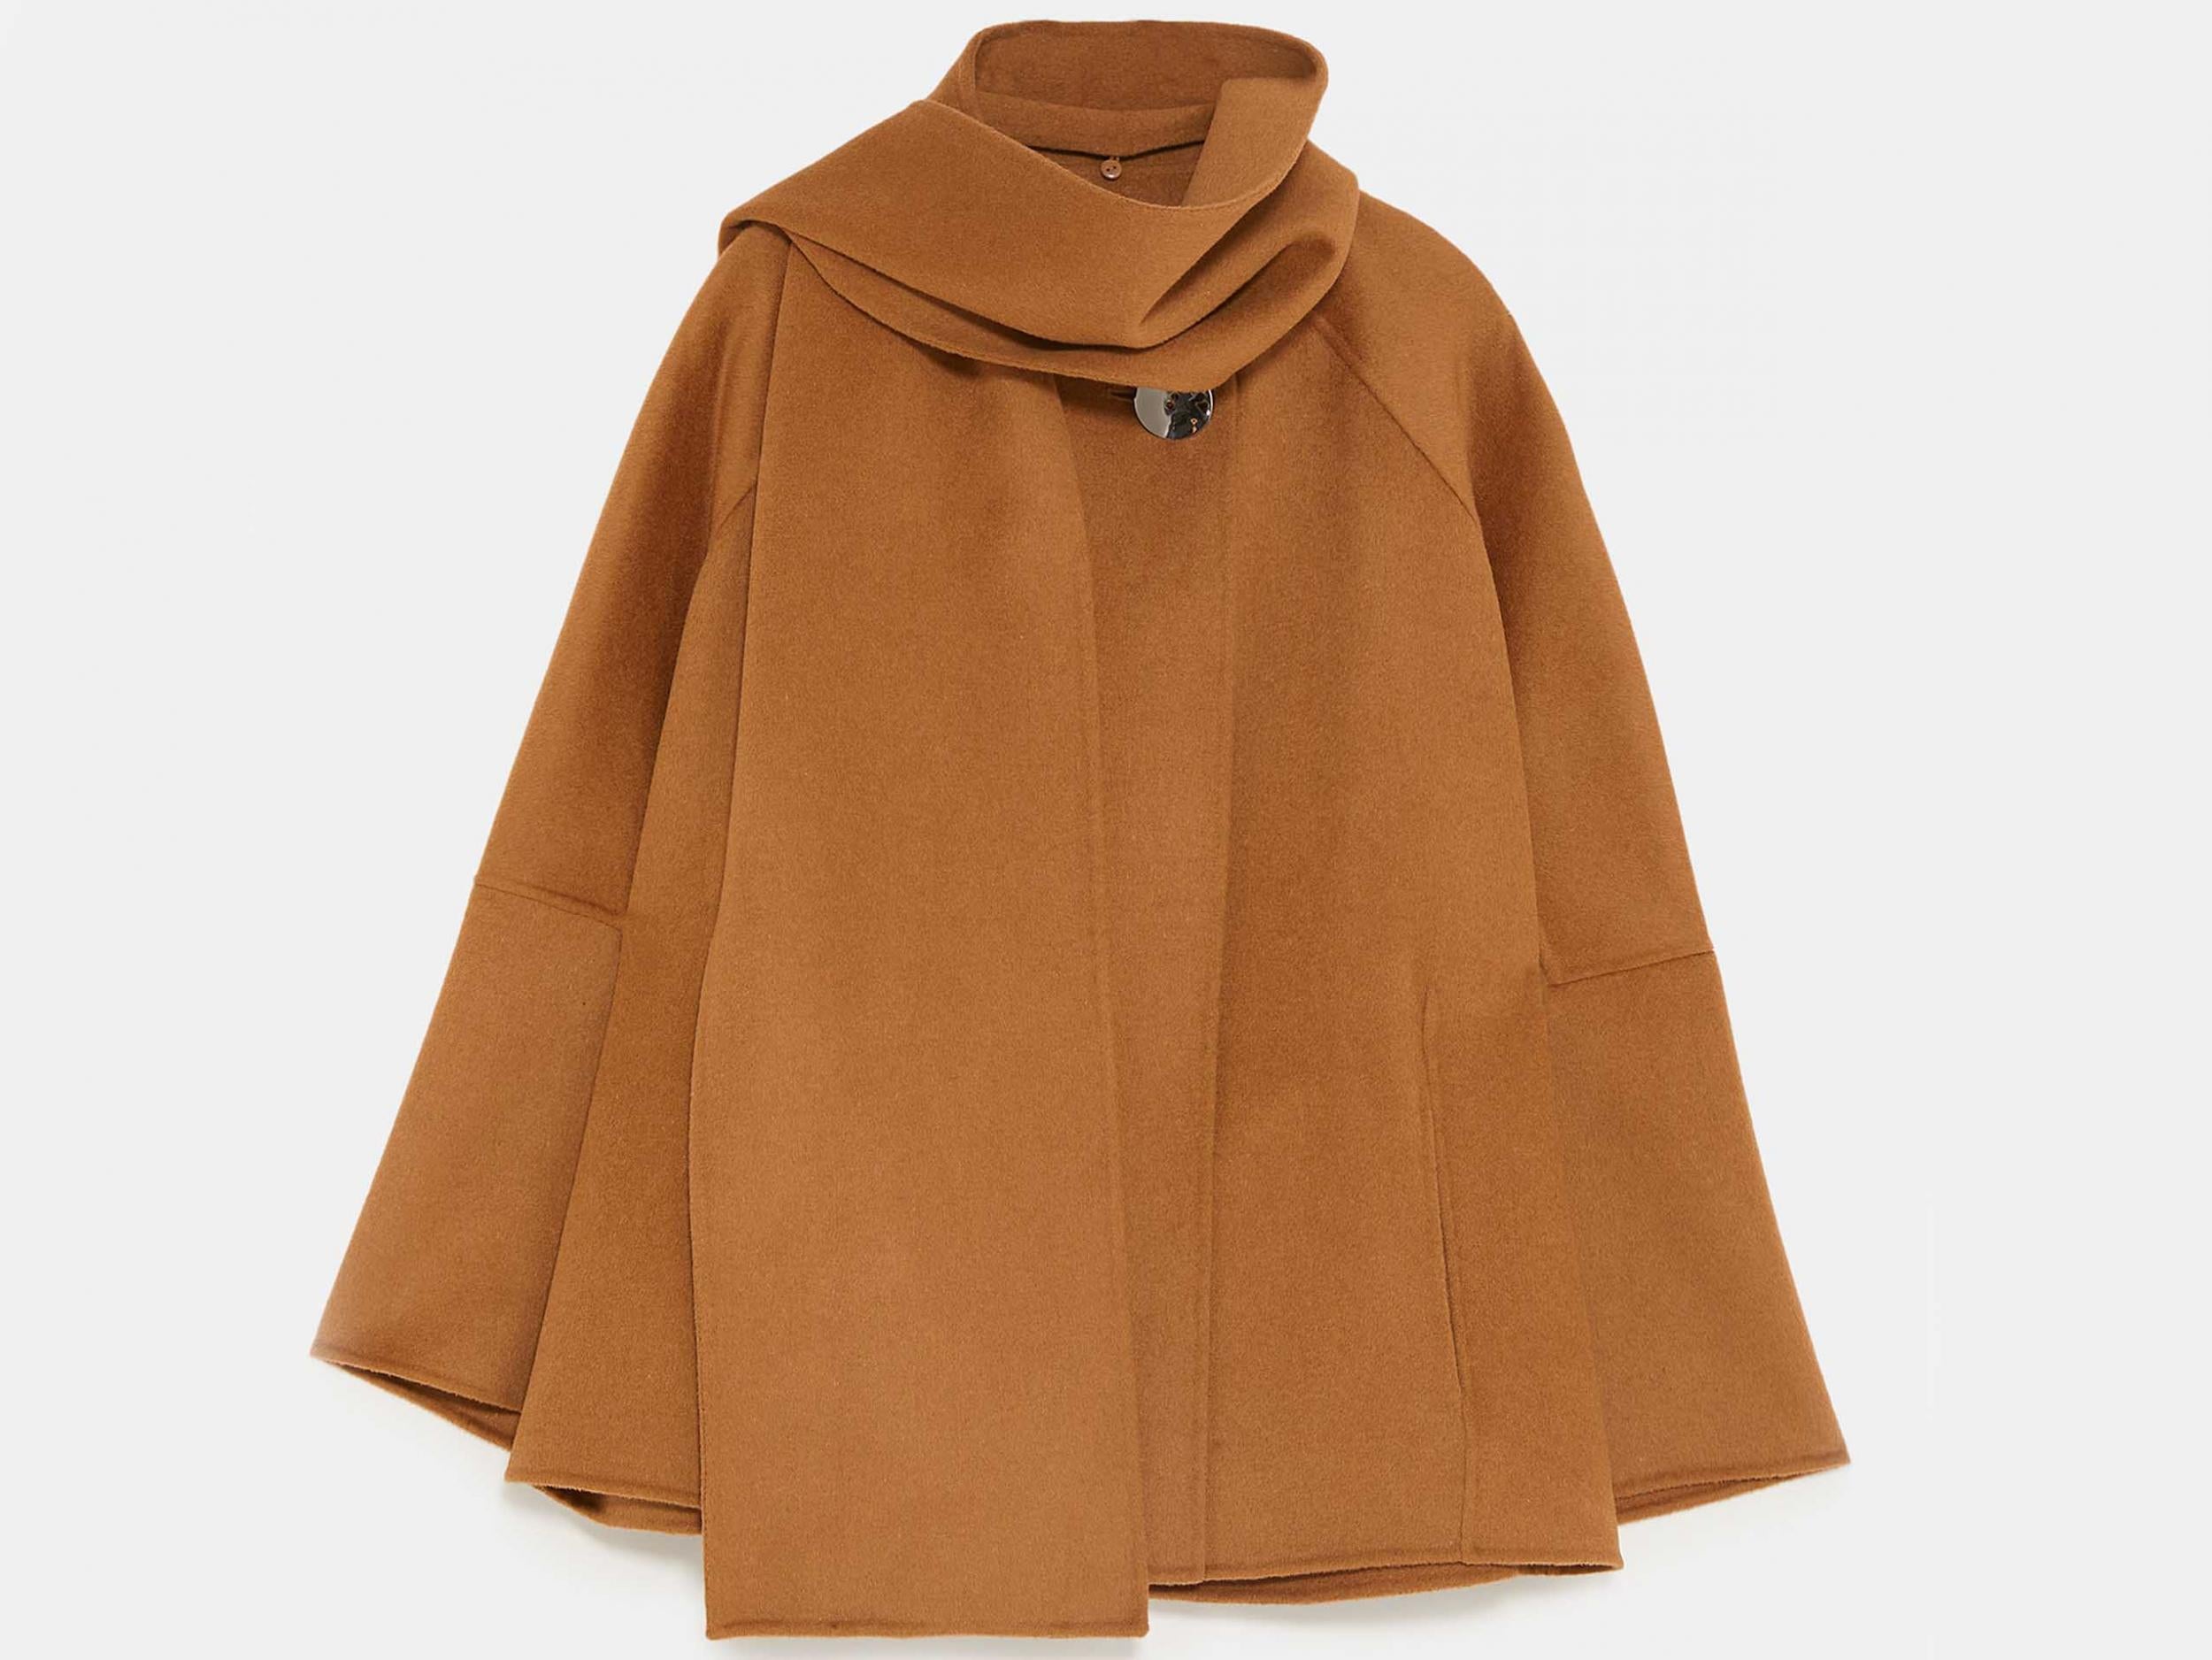 Cape coat with scarf, £99.99, Zara